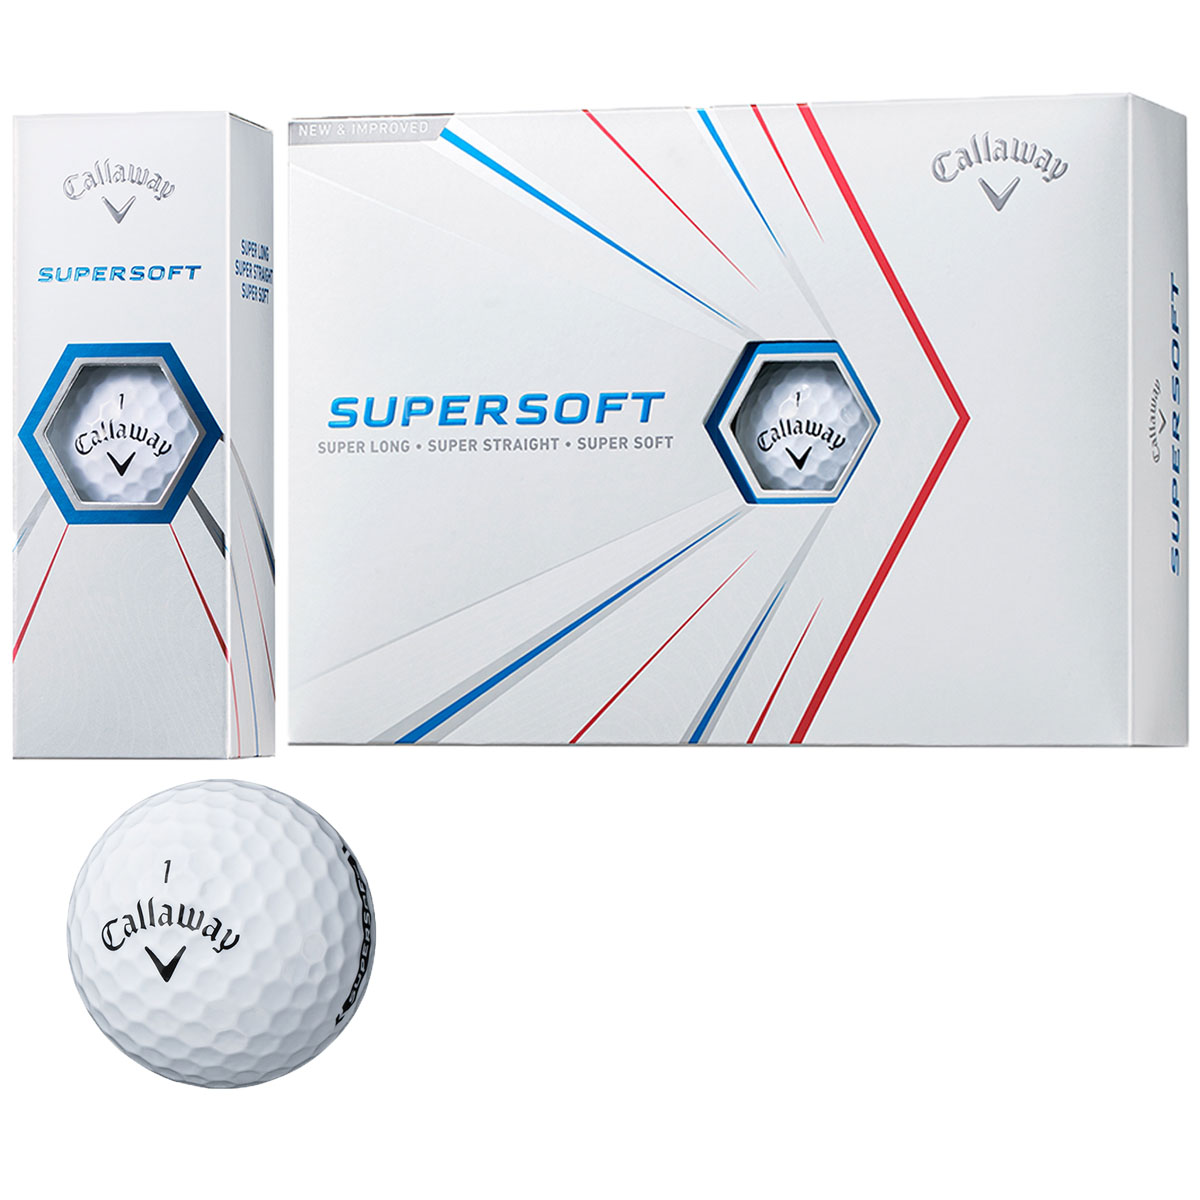  SUPERSOFT 21 ボール 【2021年3月5日発売予定】